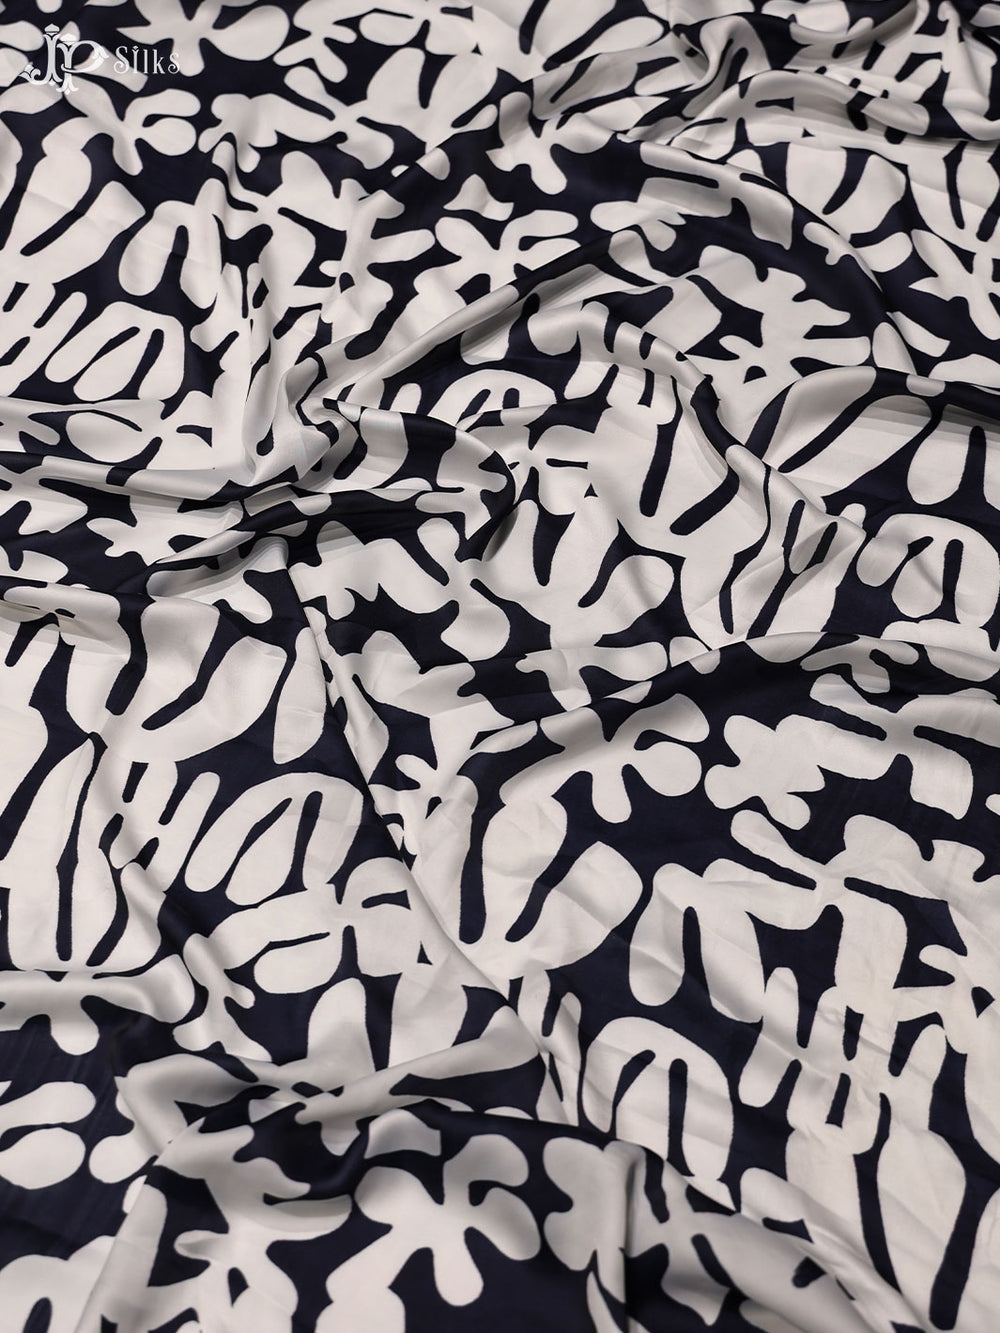 Black and White Digital Printed Crepe Fabric - E3482 - View 1